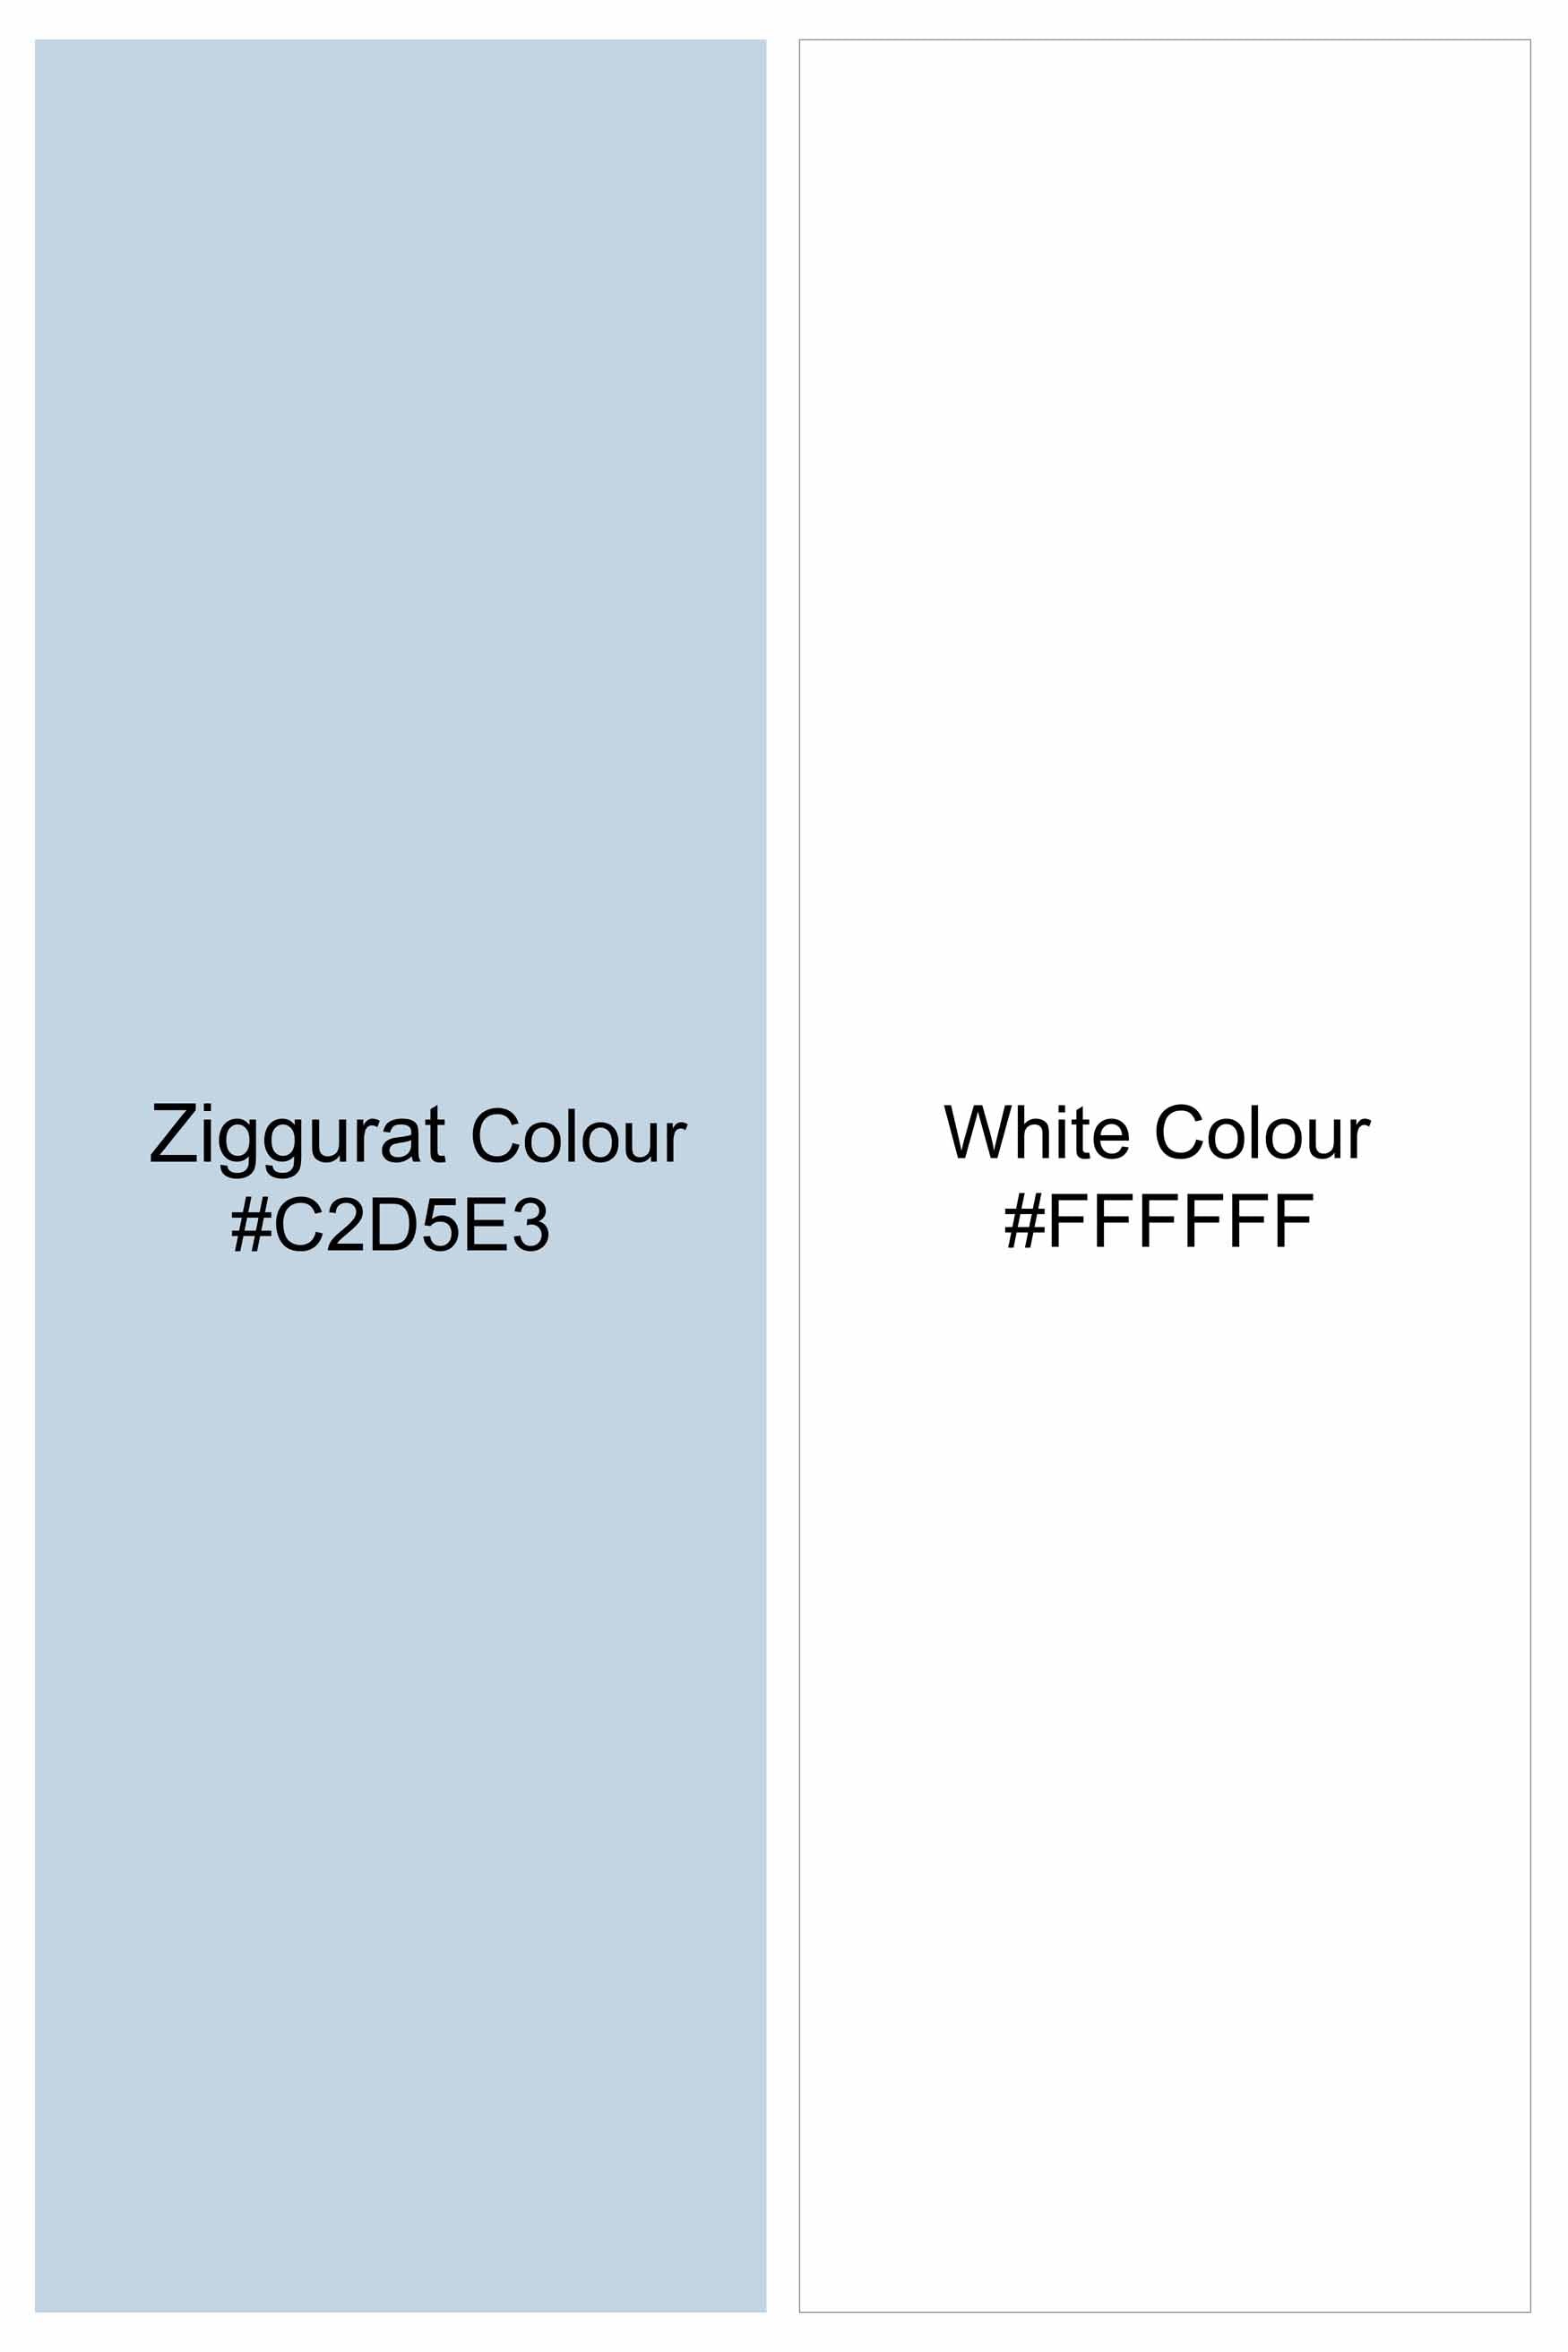 Bright White and Ziggurat Blue Hand Painted Subtle Sheen Super Soft Premium Cotton Designer Shirt 6488-M-P72-ART-38, 6488-M-P72-ART-H-38, 6488-M-P72-ART-39, 6488-M-P72-ART-H-39, 6488-M-P72-ART-40, 6488-M-P72-ART-H-40, 6488-M-P72-ART-42, 6488-M-P72-ART-H-42, 6488-M-P72-ART-44, 6488-M-P72-ART-H-44, 6488-M-P72-ART-46, 6488-M-P72-ART-H-46, 6488-M-P72-ART-48, 6488-M-P72-ART-H-48, 6488-M-P72-ART-50, 6488-M-P72-ART-H-50, 6488-M-P72-ART-52, 6488-M-P72-ART-H-52